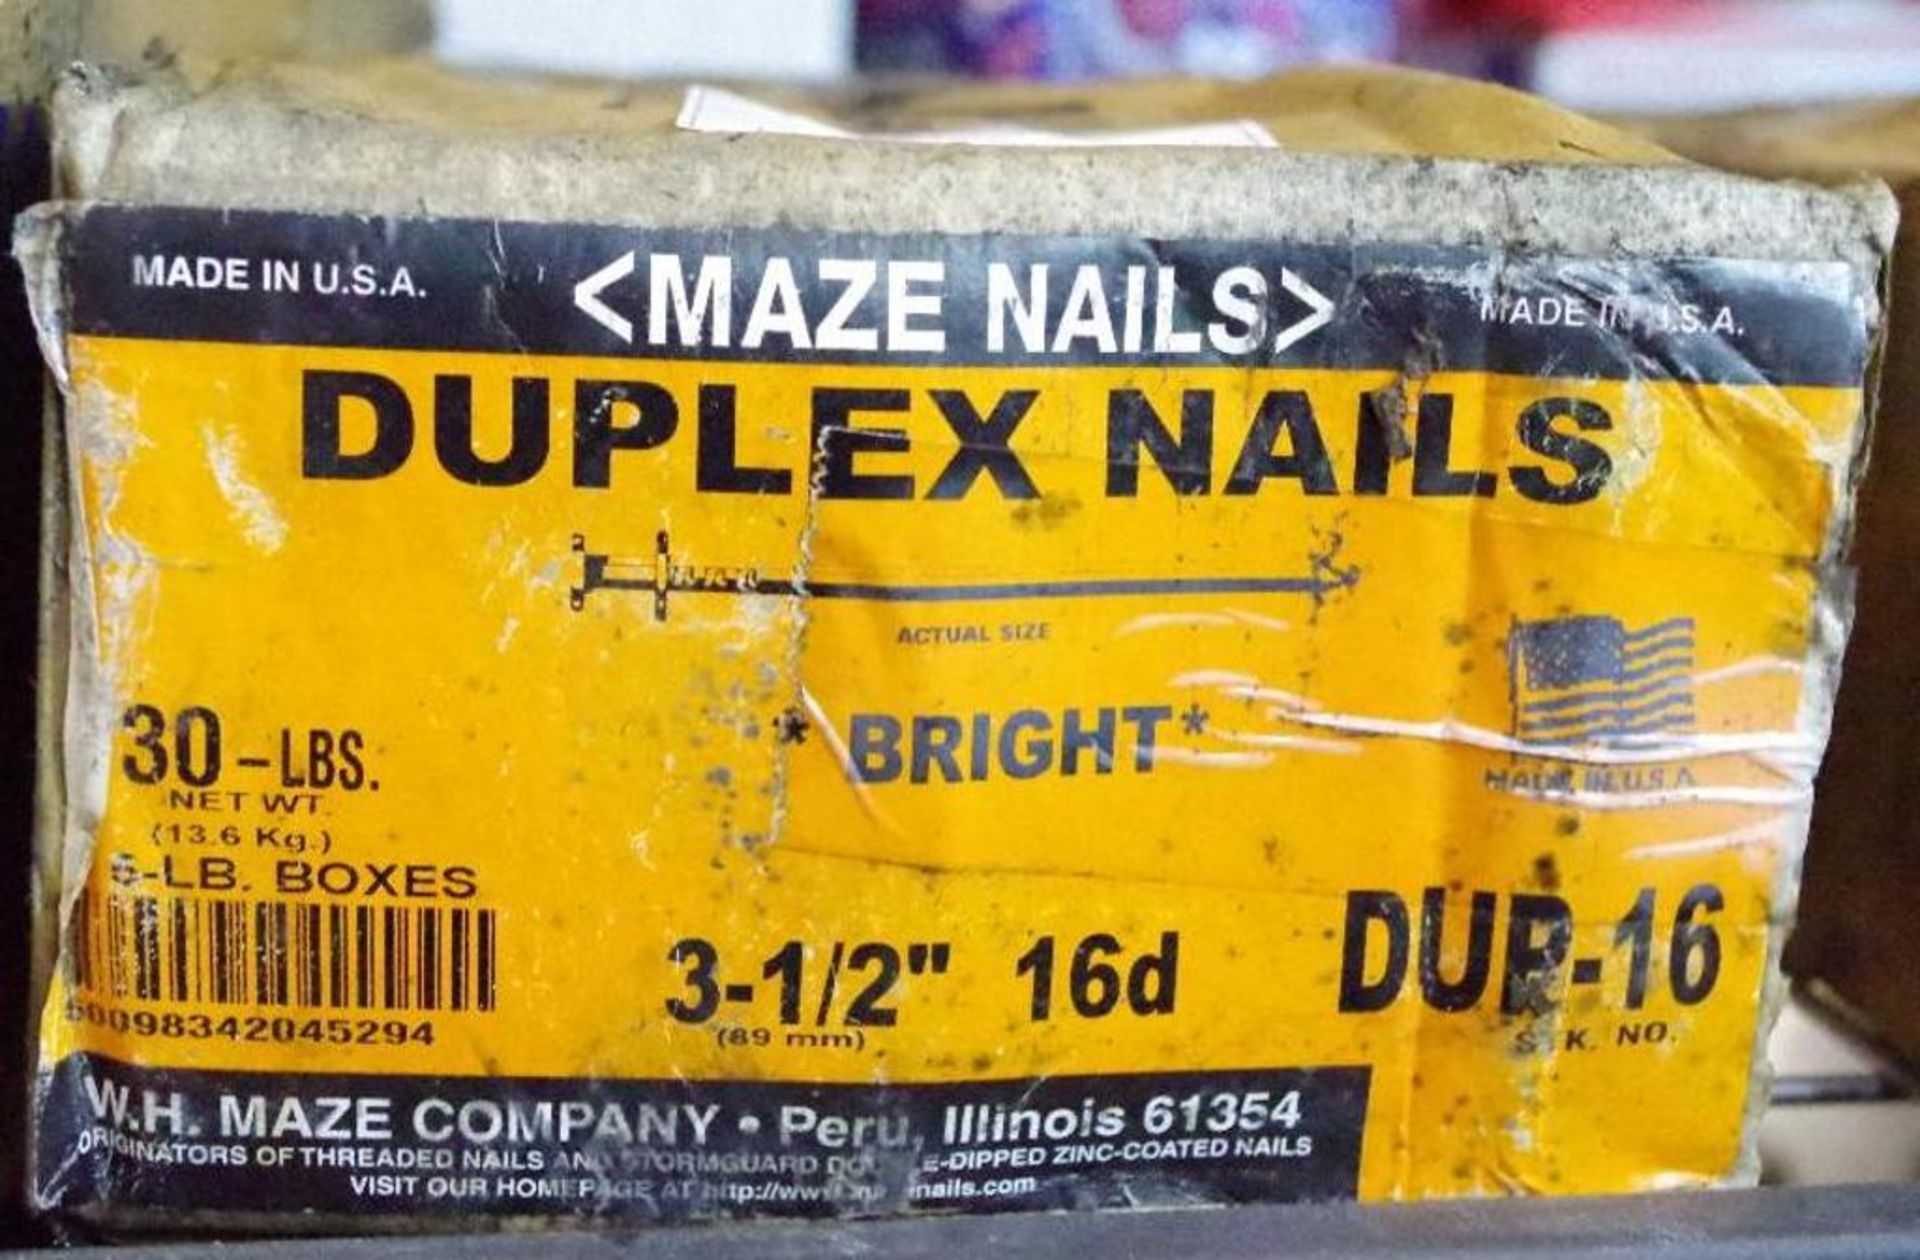 [30] Lbs MAZE Duplex Nails, Bright, 3-1/2", 16d M/N DUP-16 (6 Boxes of 5 Lbs)